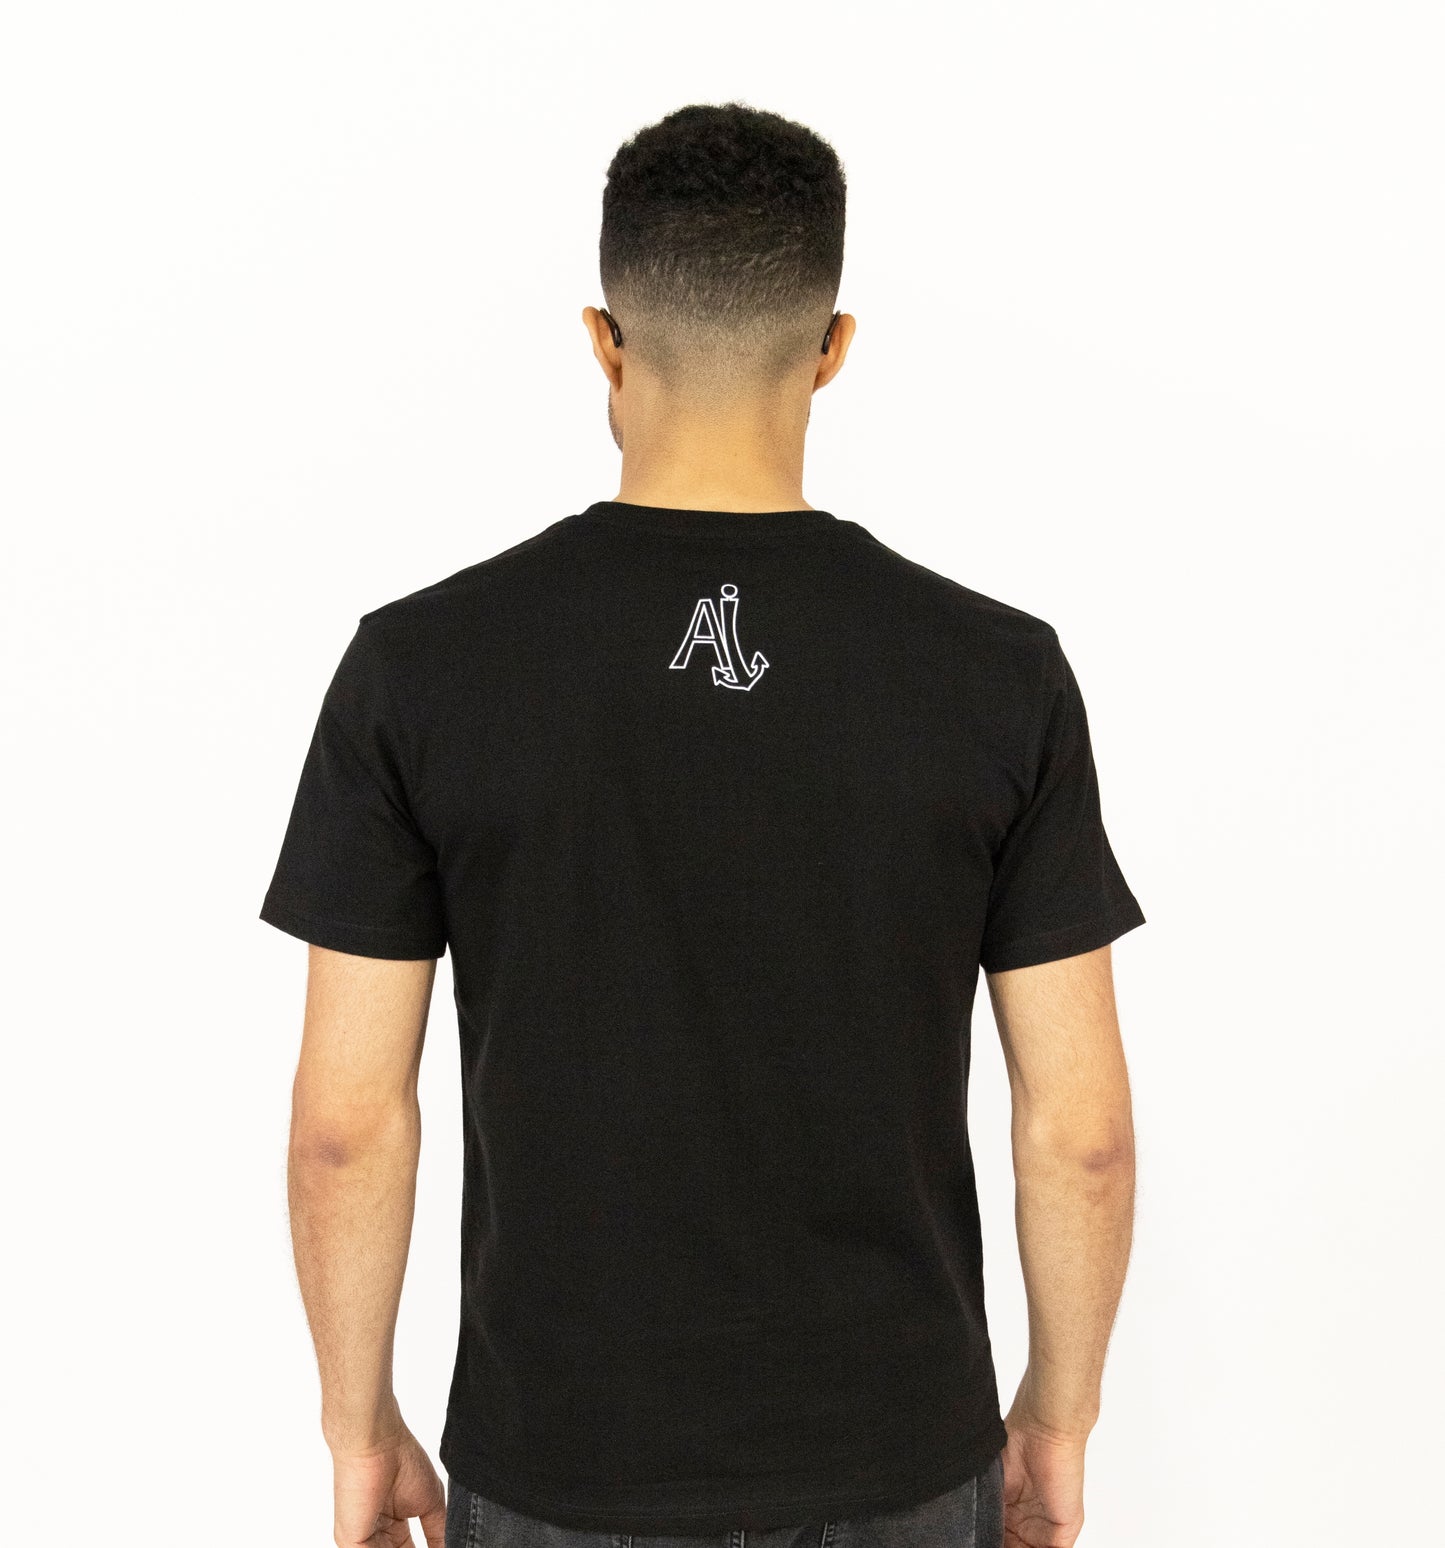 T Shirt - Black with Orange logo